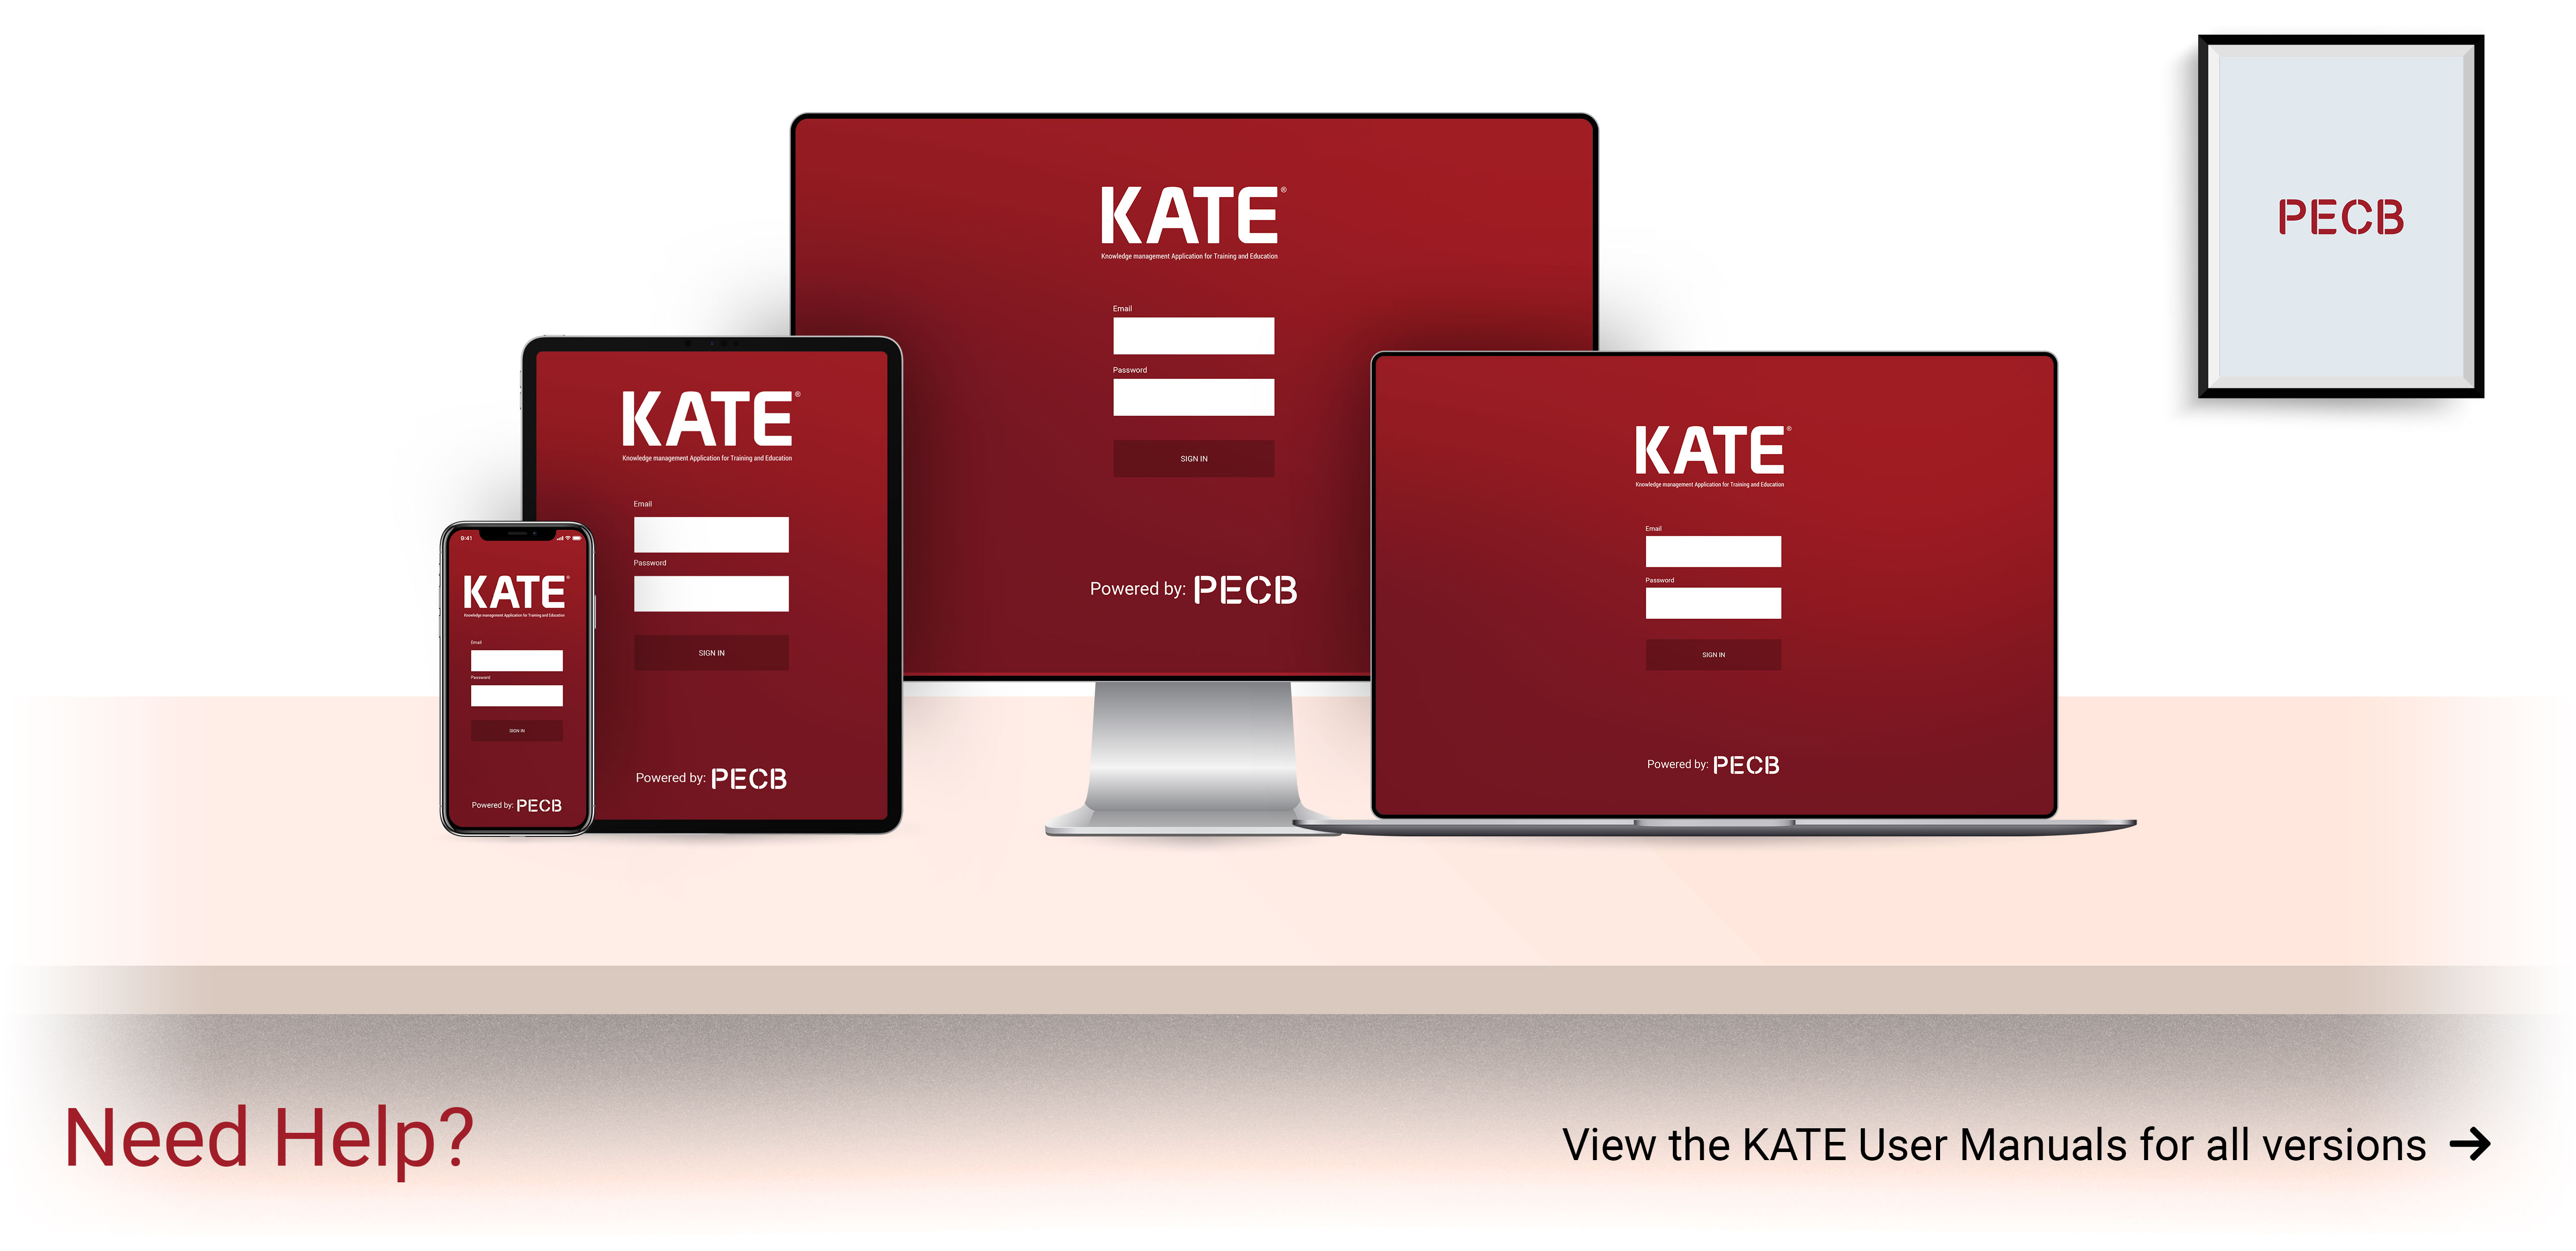 KATE Application